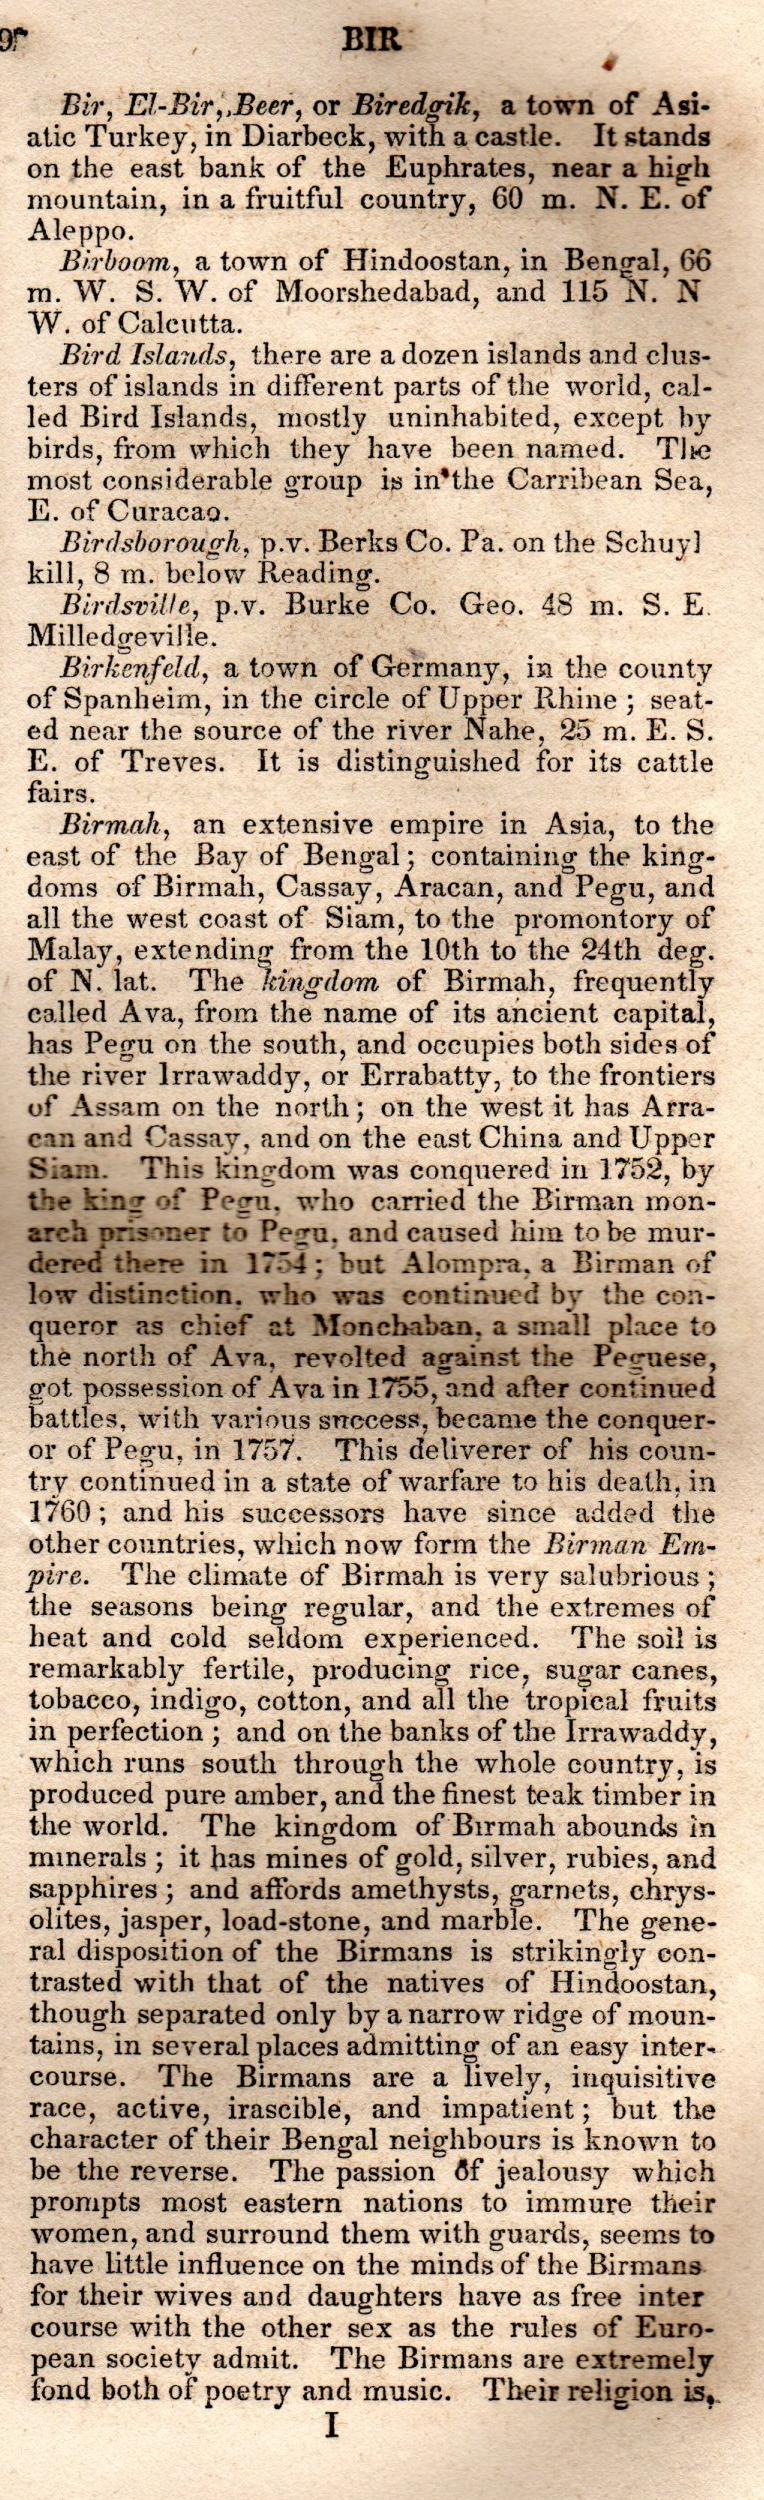 Brookes’ Universal Gazetteer (1850), Page 97 Right Column